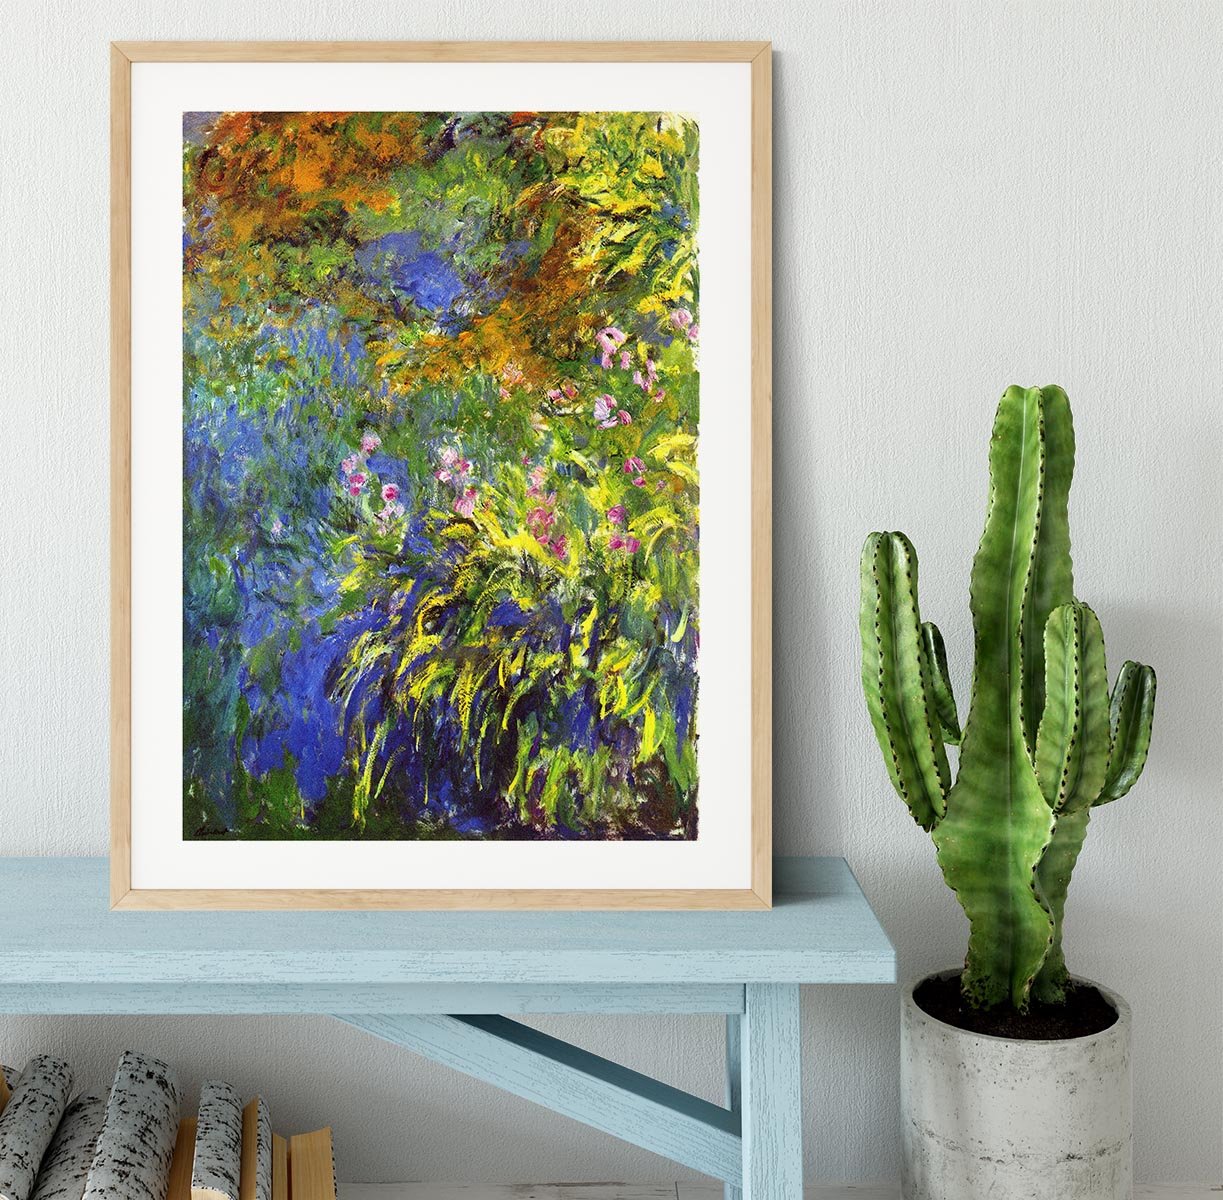 Iris at the sea rose pond 2 by Monet Framed Print - Canvas Art Rocks - 3